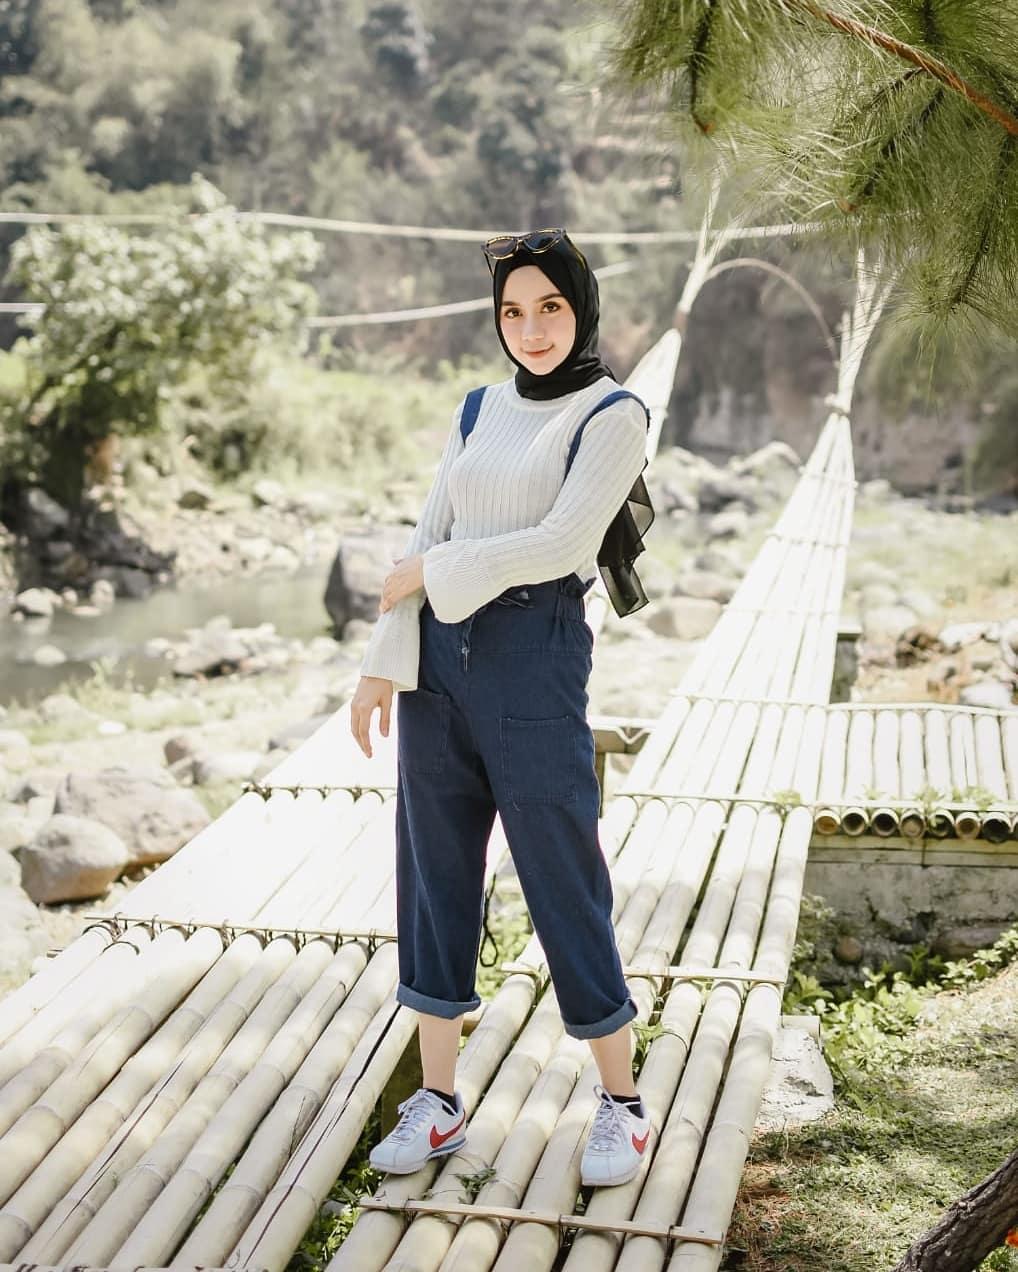 Baju Muslim Modern MISCA OVERALL Jeans Wash Baju Wanita Jumpsuit Casual Pakaian Modern Baju Kerja Hijab Modern Terbaru Overall Kekinian Baju Kodok Baju Terusan Muslimah Jumpsuit Lucu Overall Keren Kekinian 2019